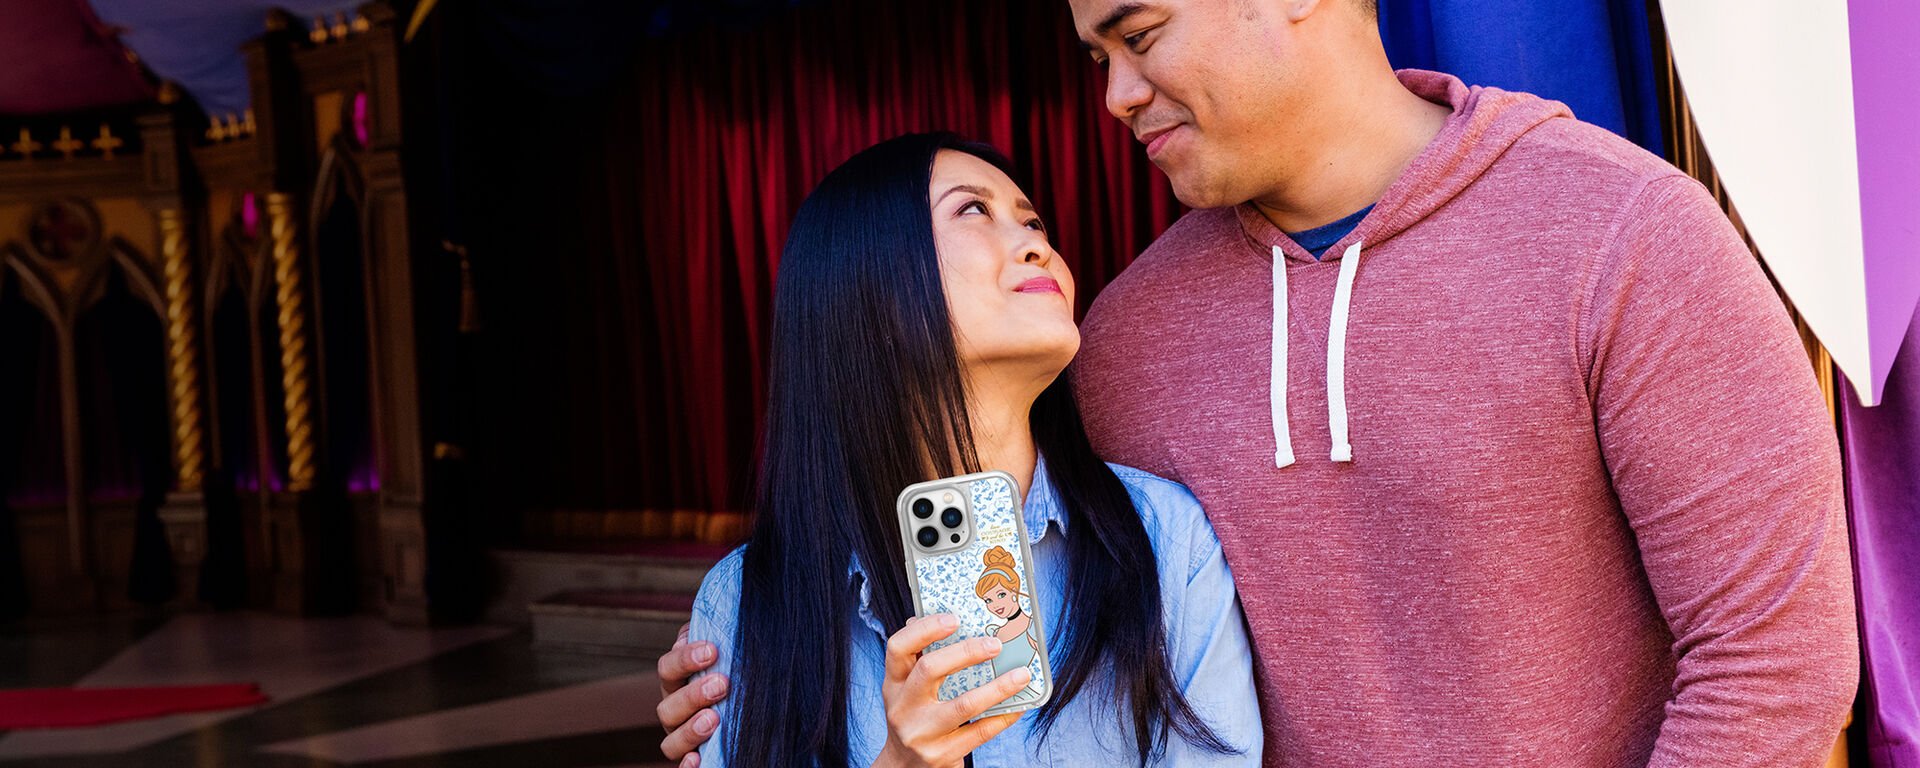 Couple at Disney with Disney Princess iPhone case